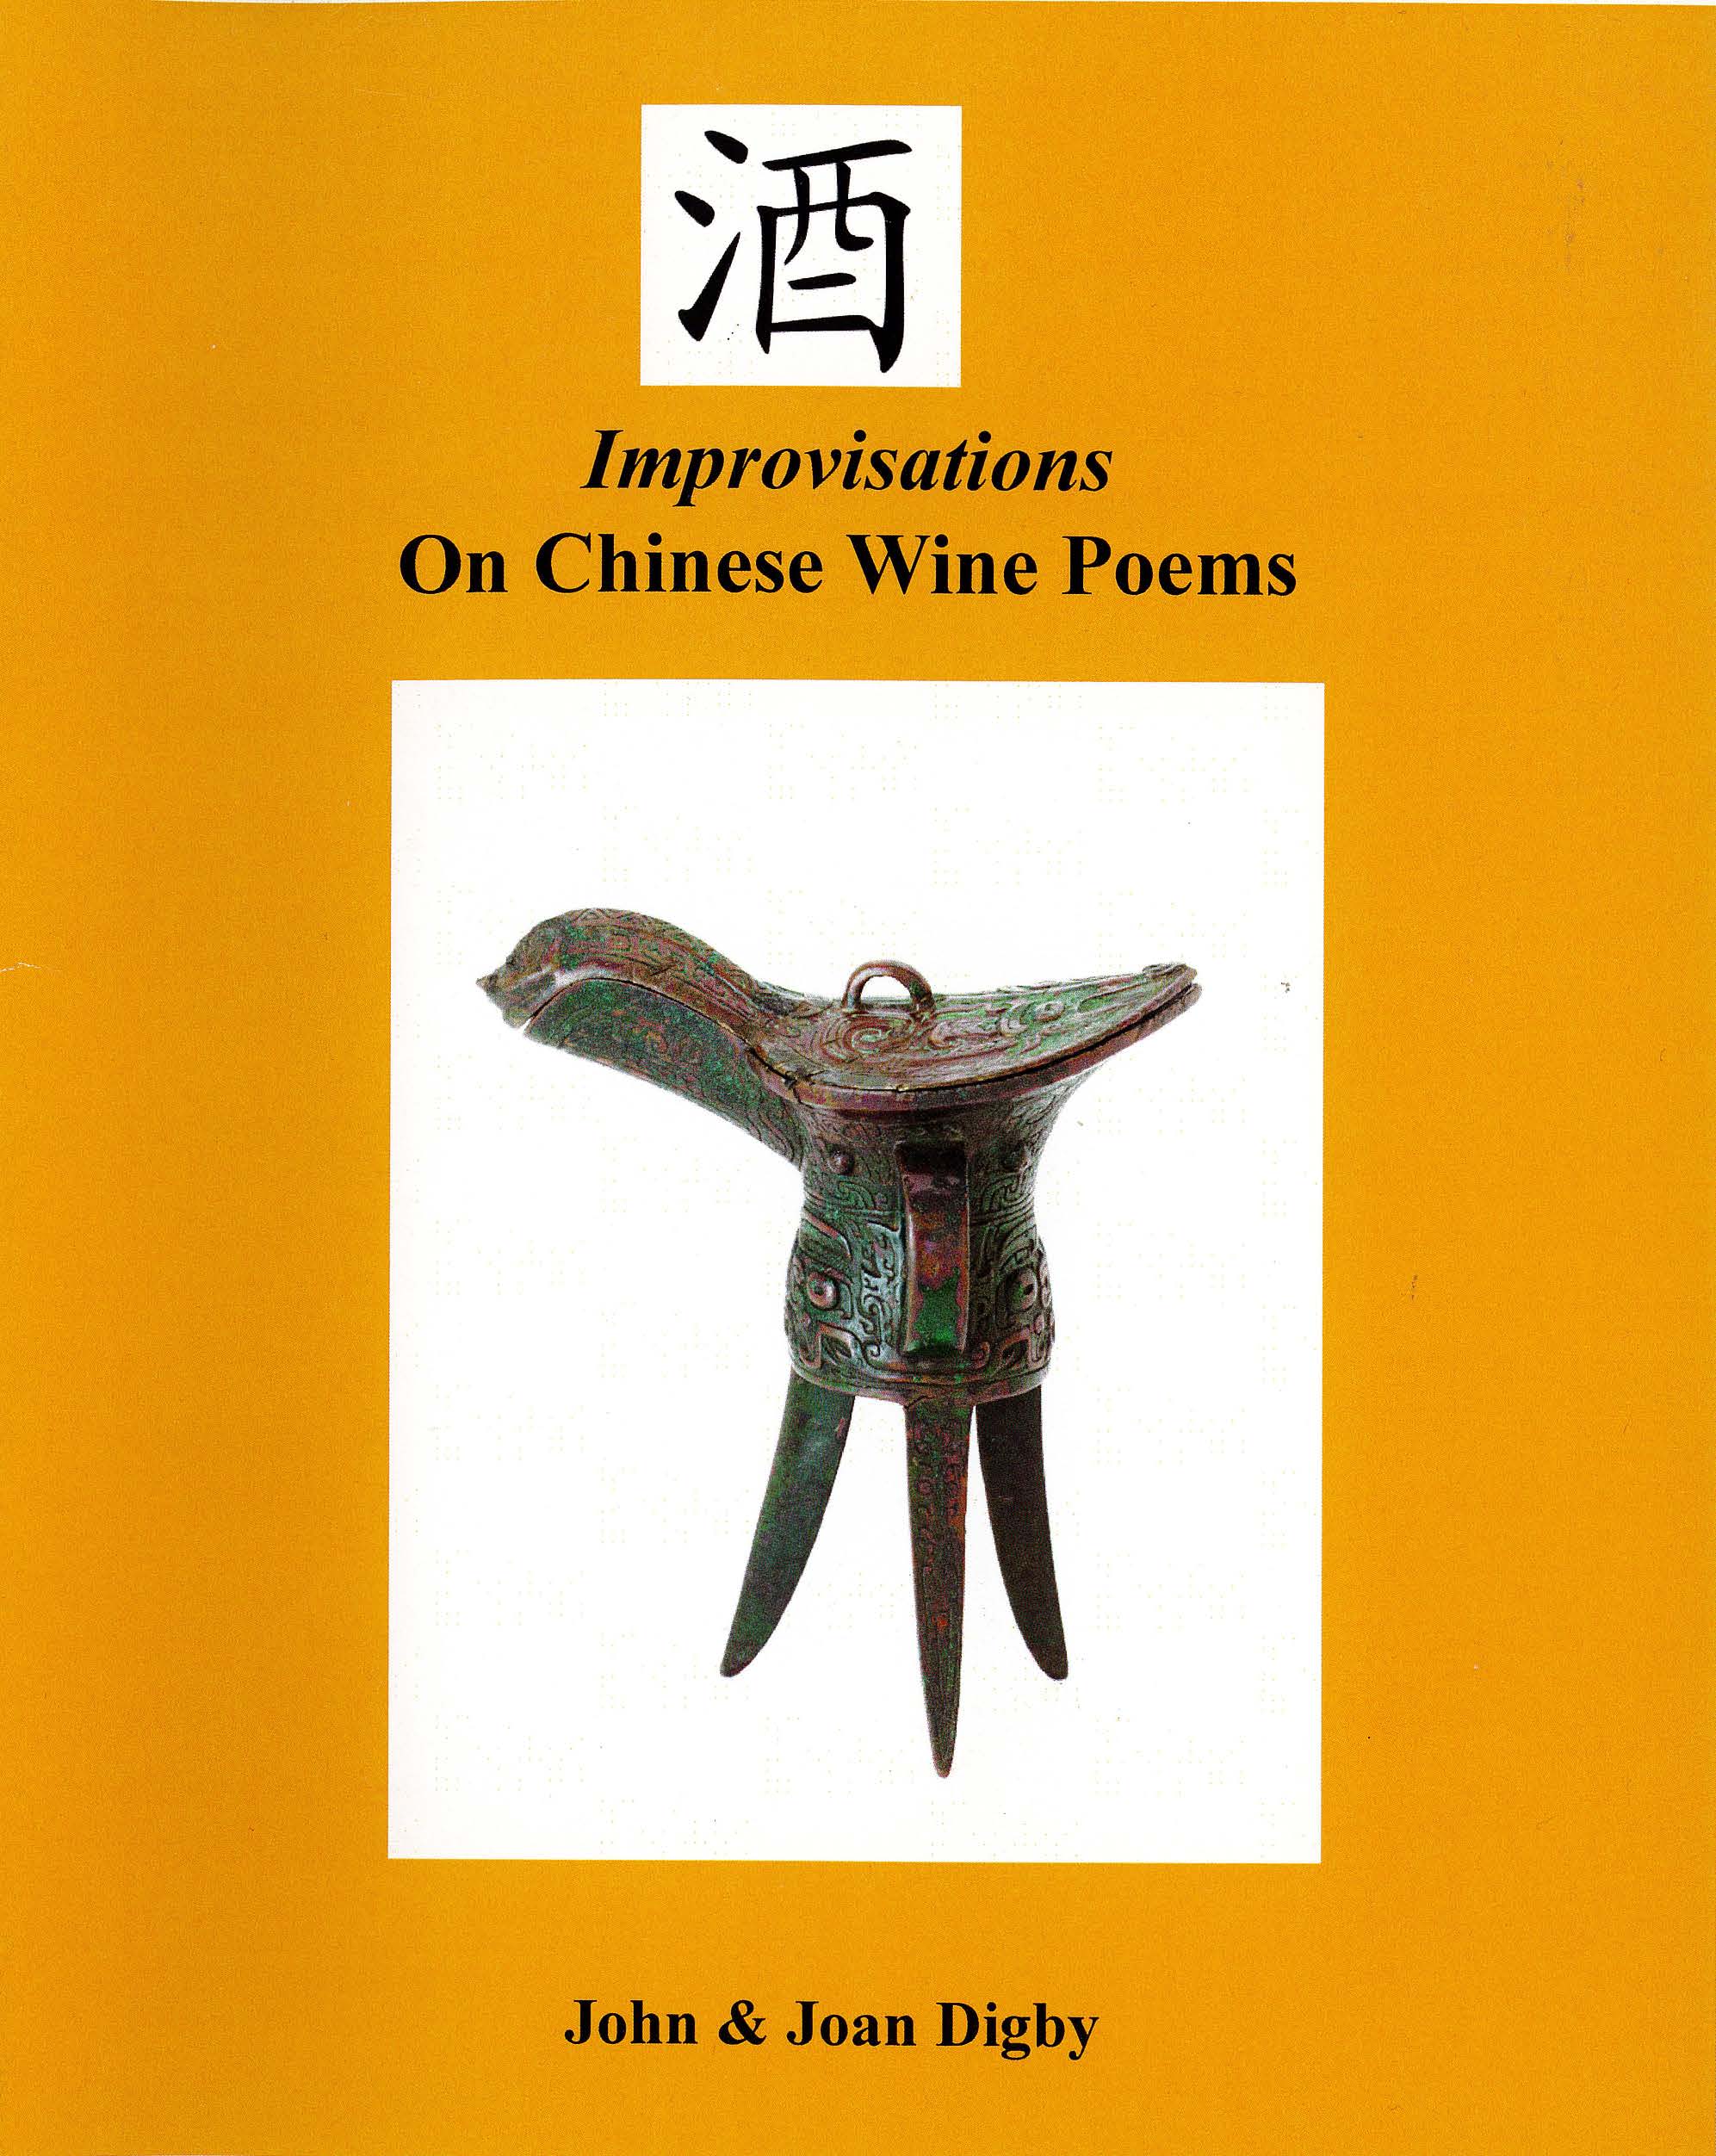 Improvisations: On Chinese Wine Poems